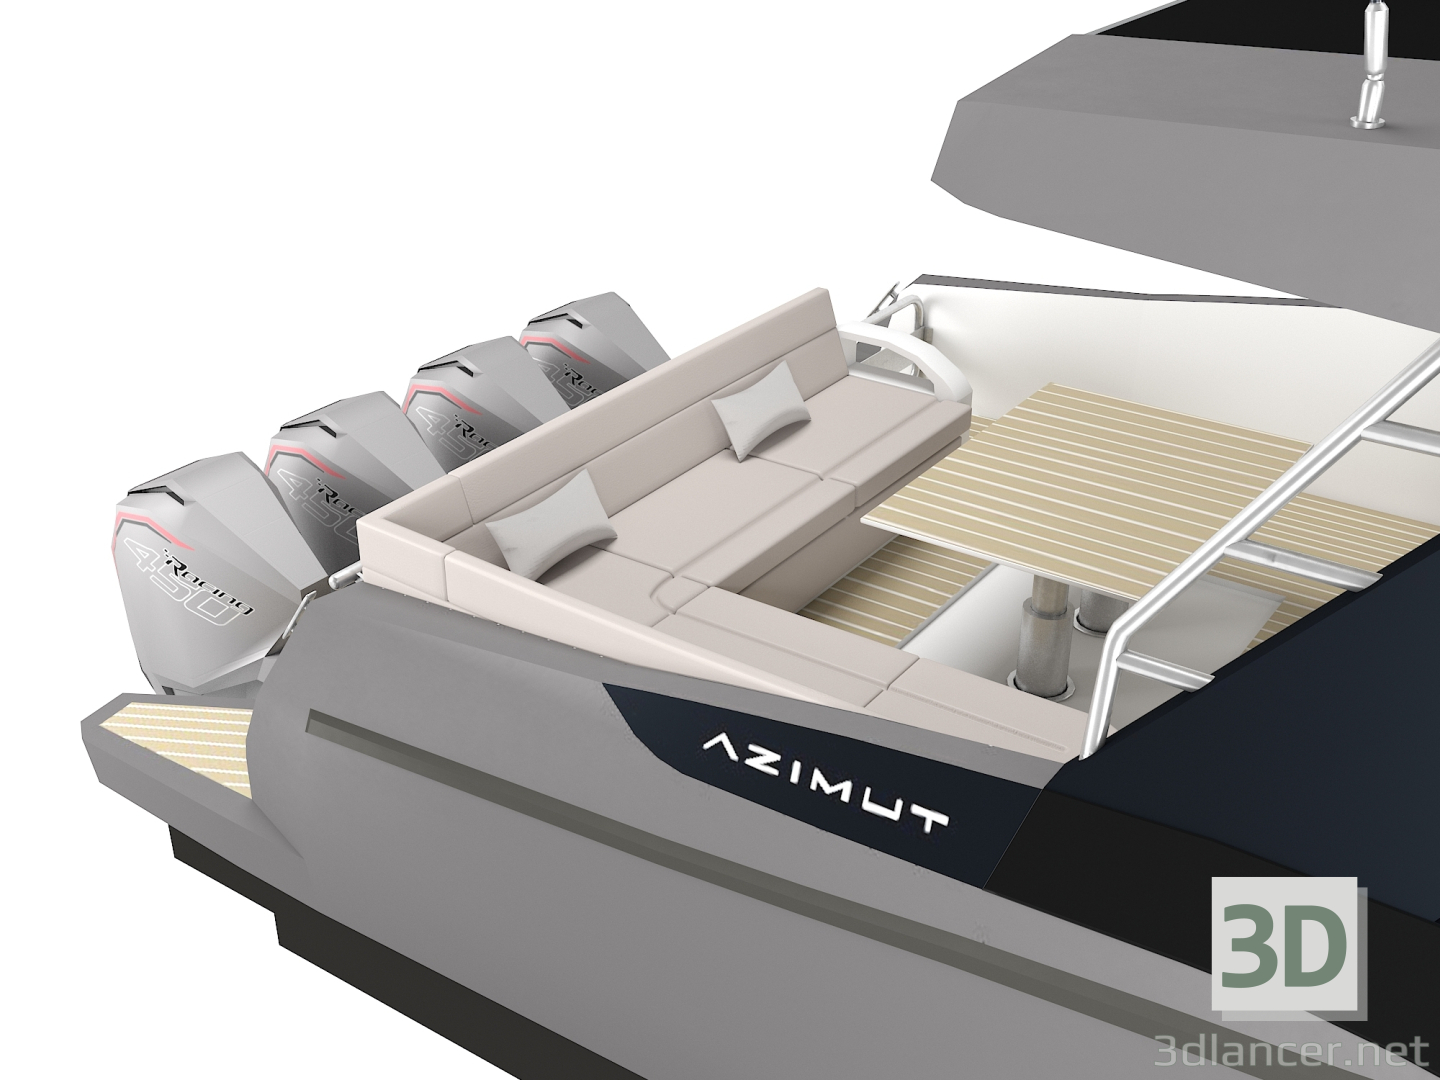 3d Motor Yacht Azimut Verve 47 model buy - render